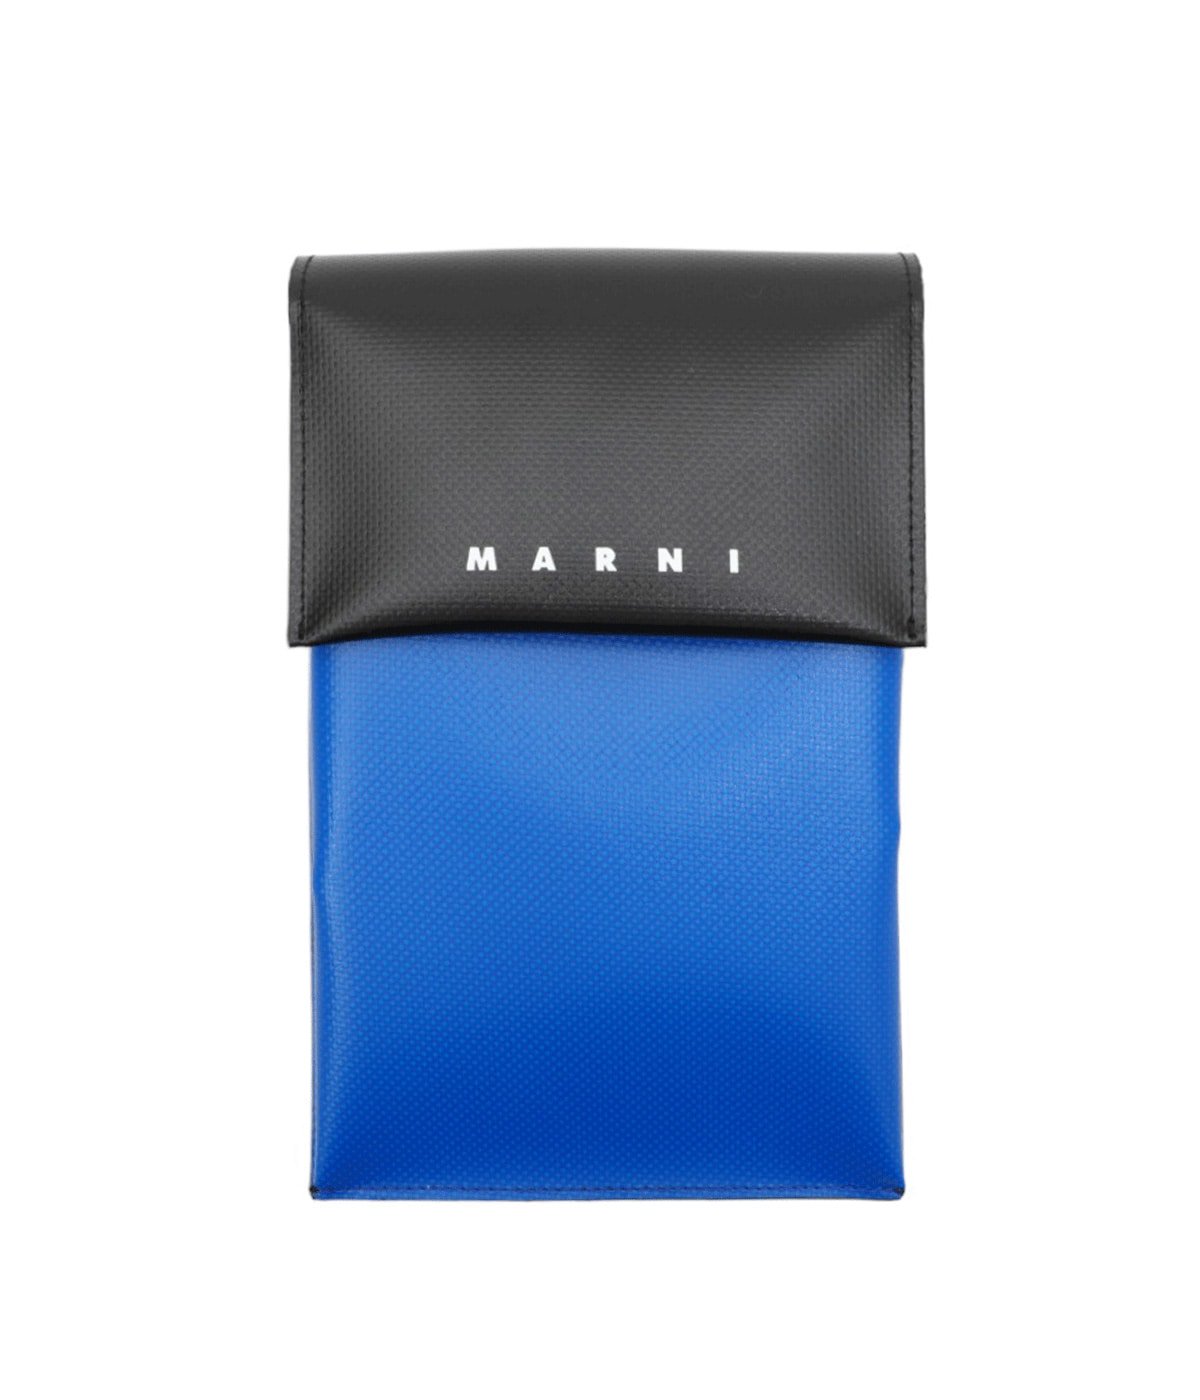 MARNI マルニ 携帯・スマホアクセサリー 携帯ケース ブラック系 ...